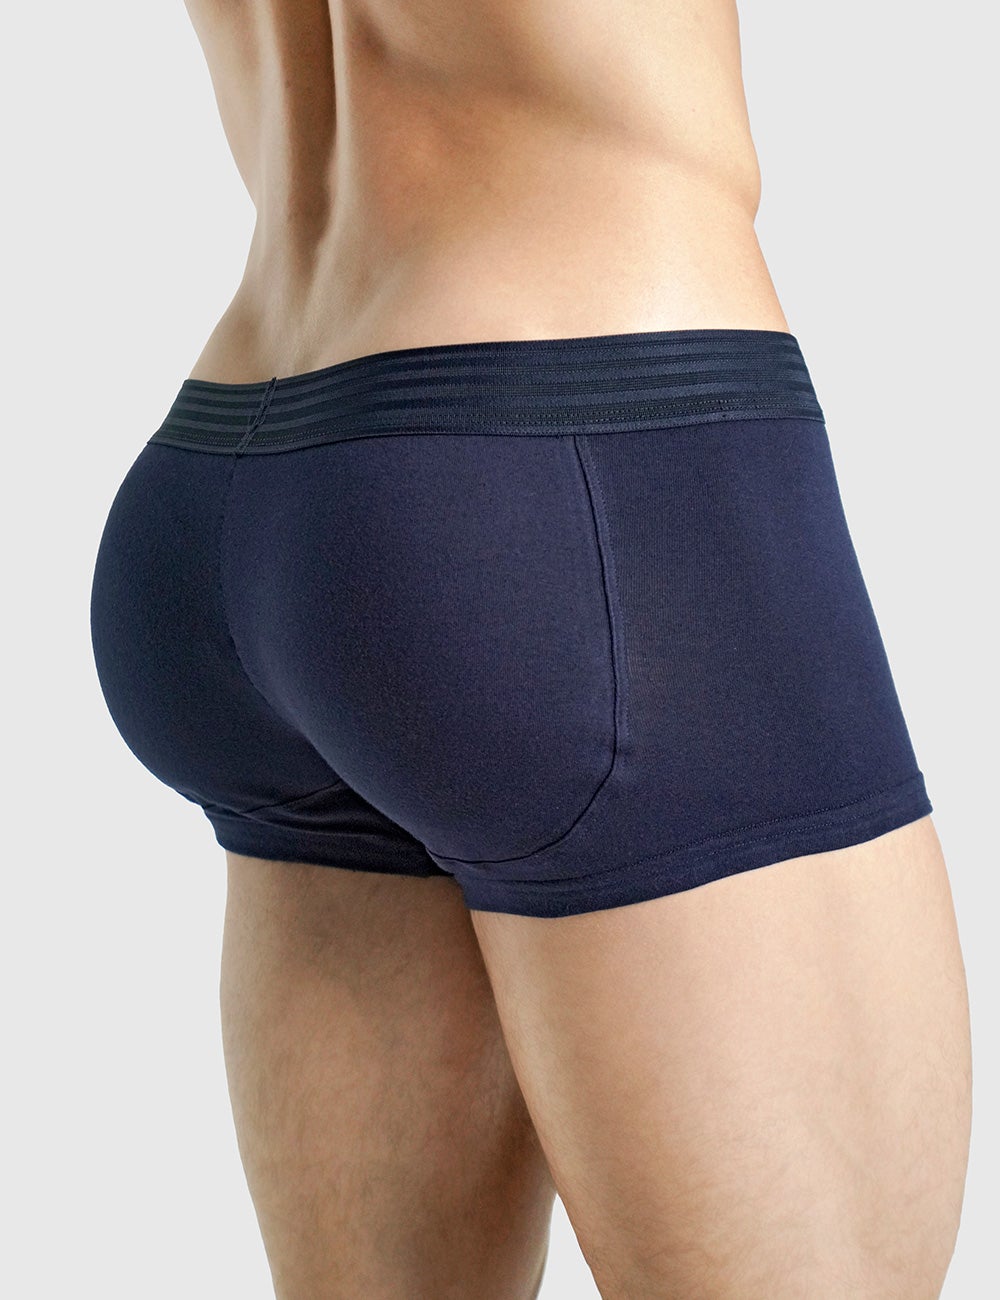 Mens Padded Underwear, Lowrise Trunk Butt Pads